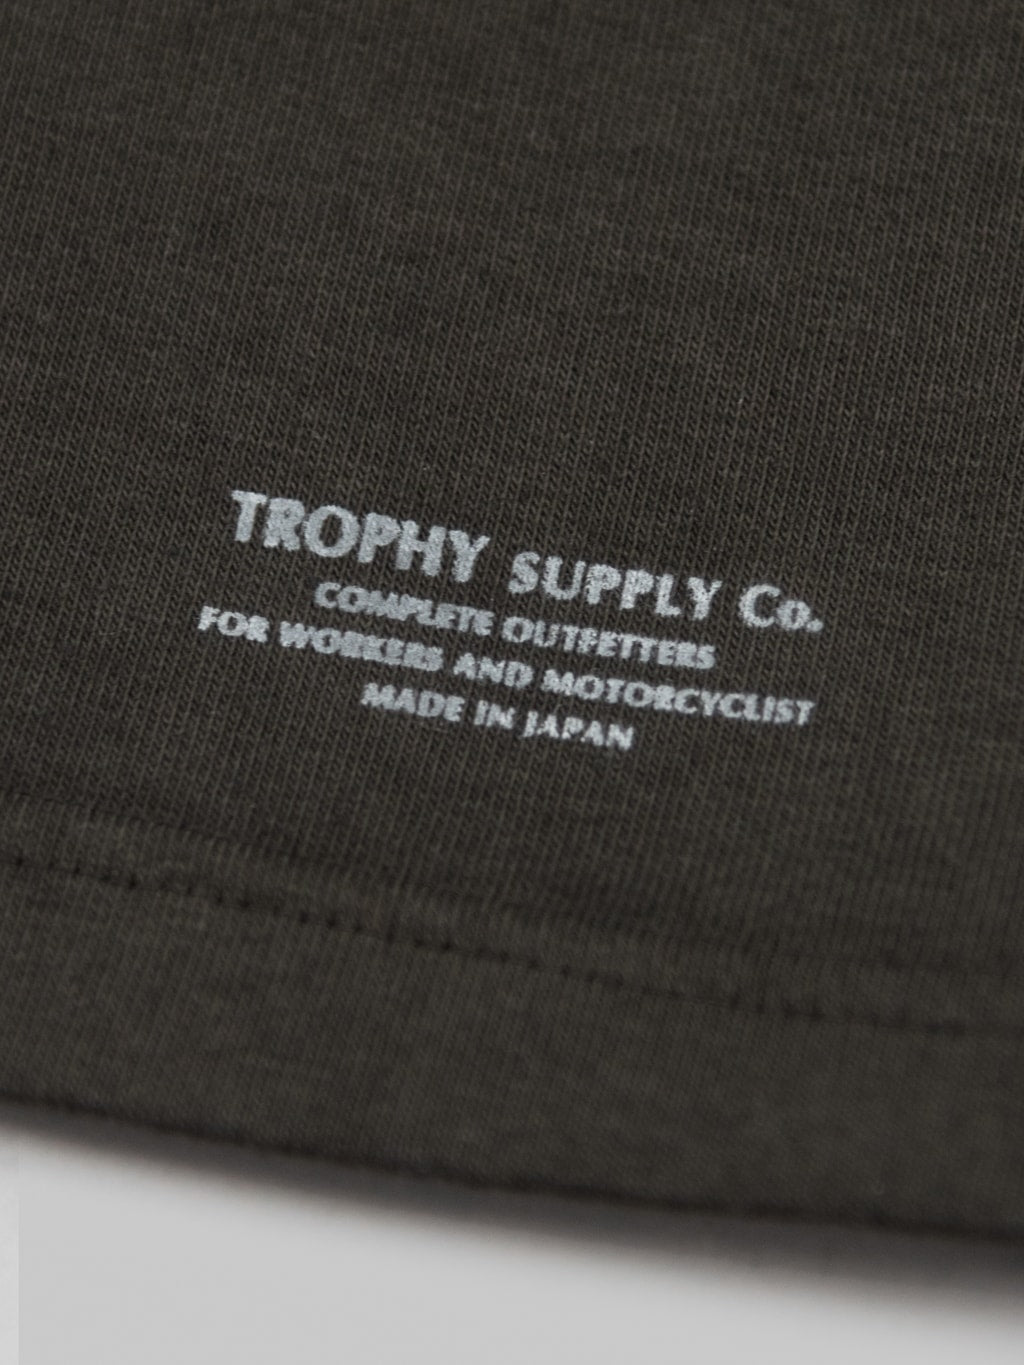 trophy clothing od pocket tee black contrasting printed branded